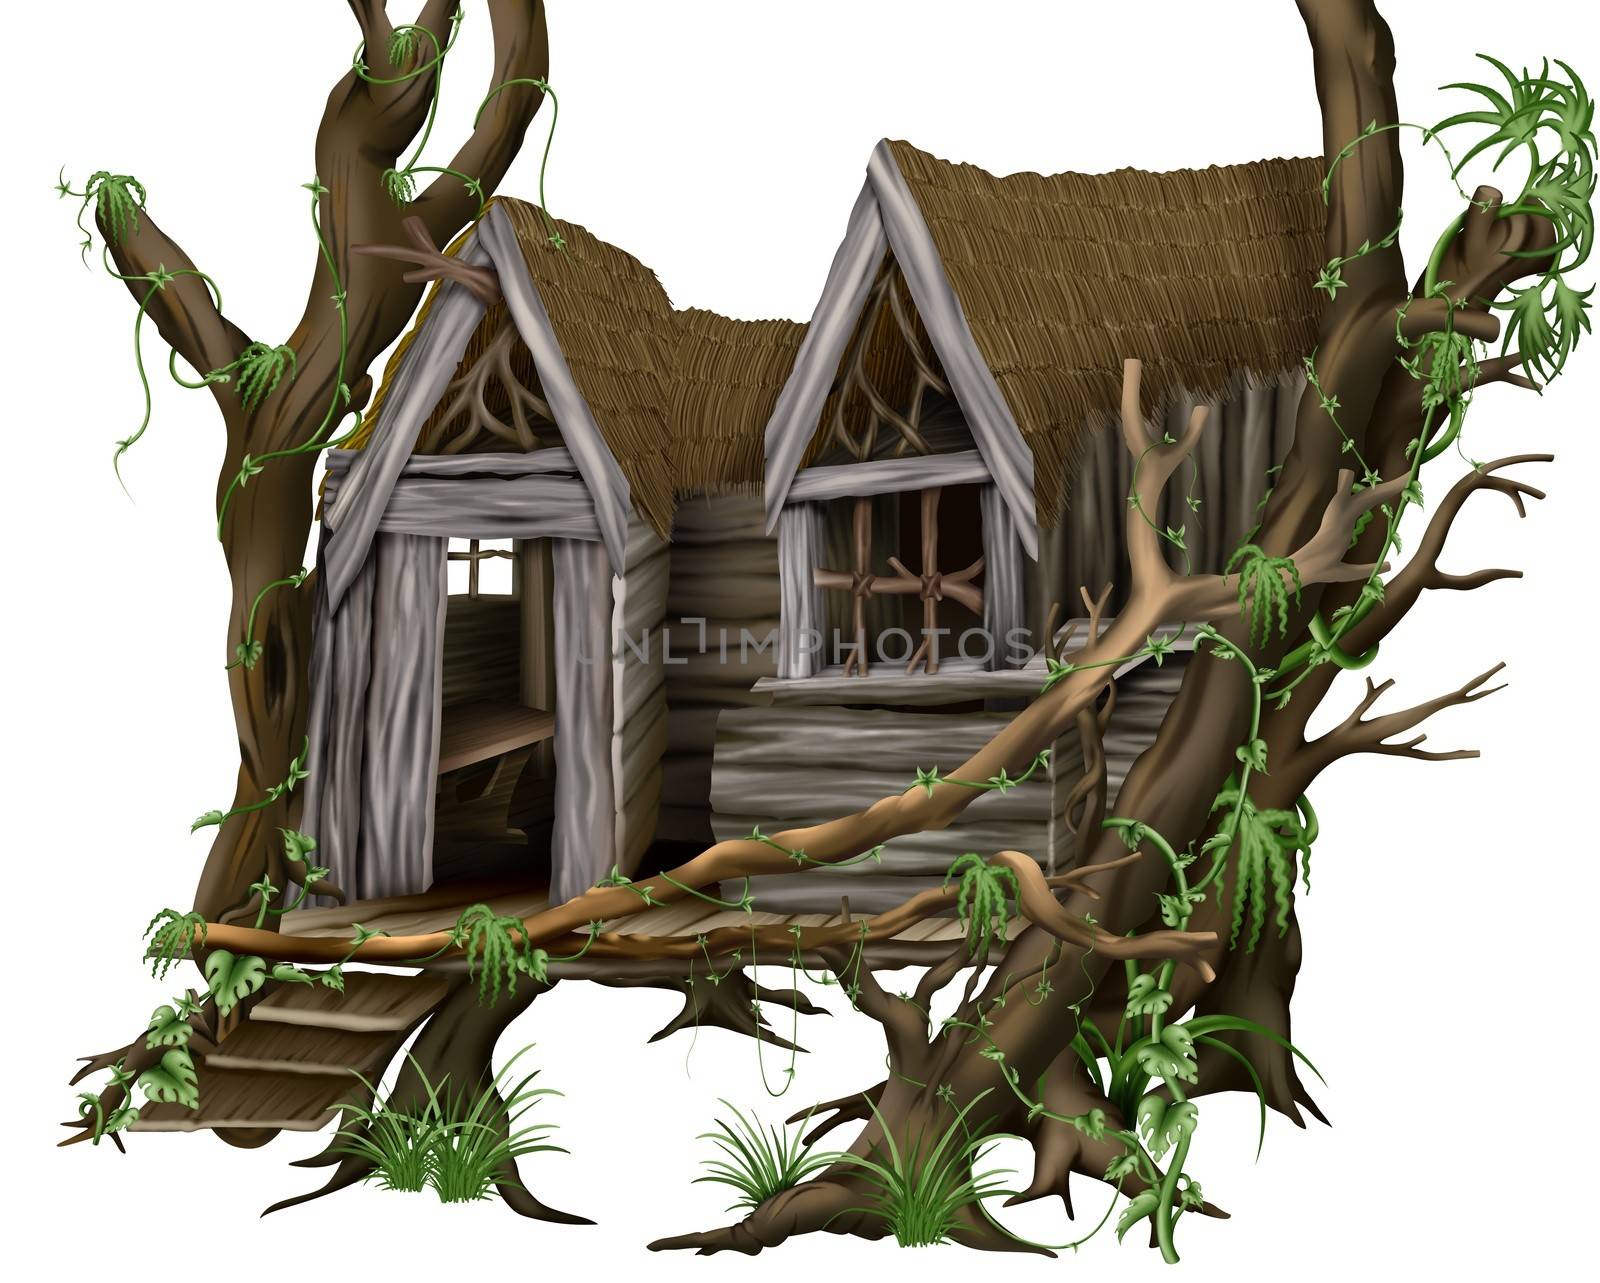 Jungle Hut by illustratorCZ